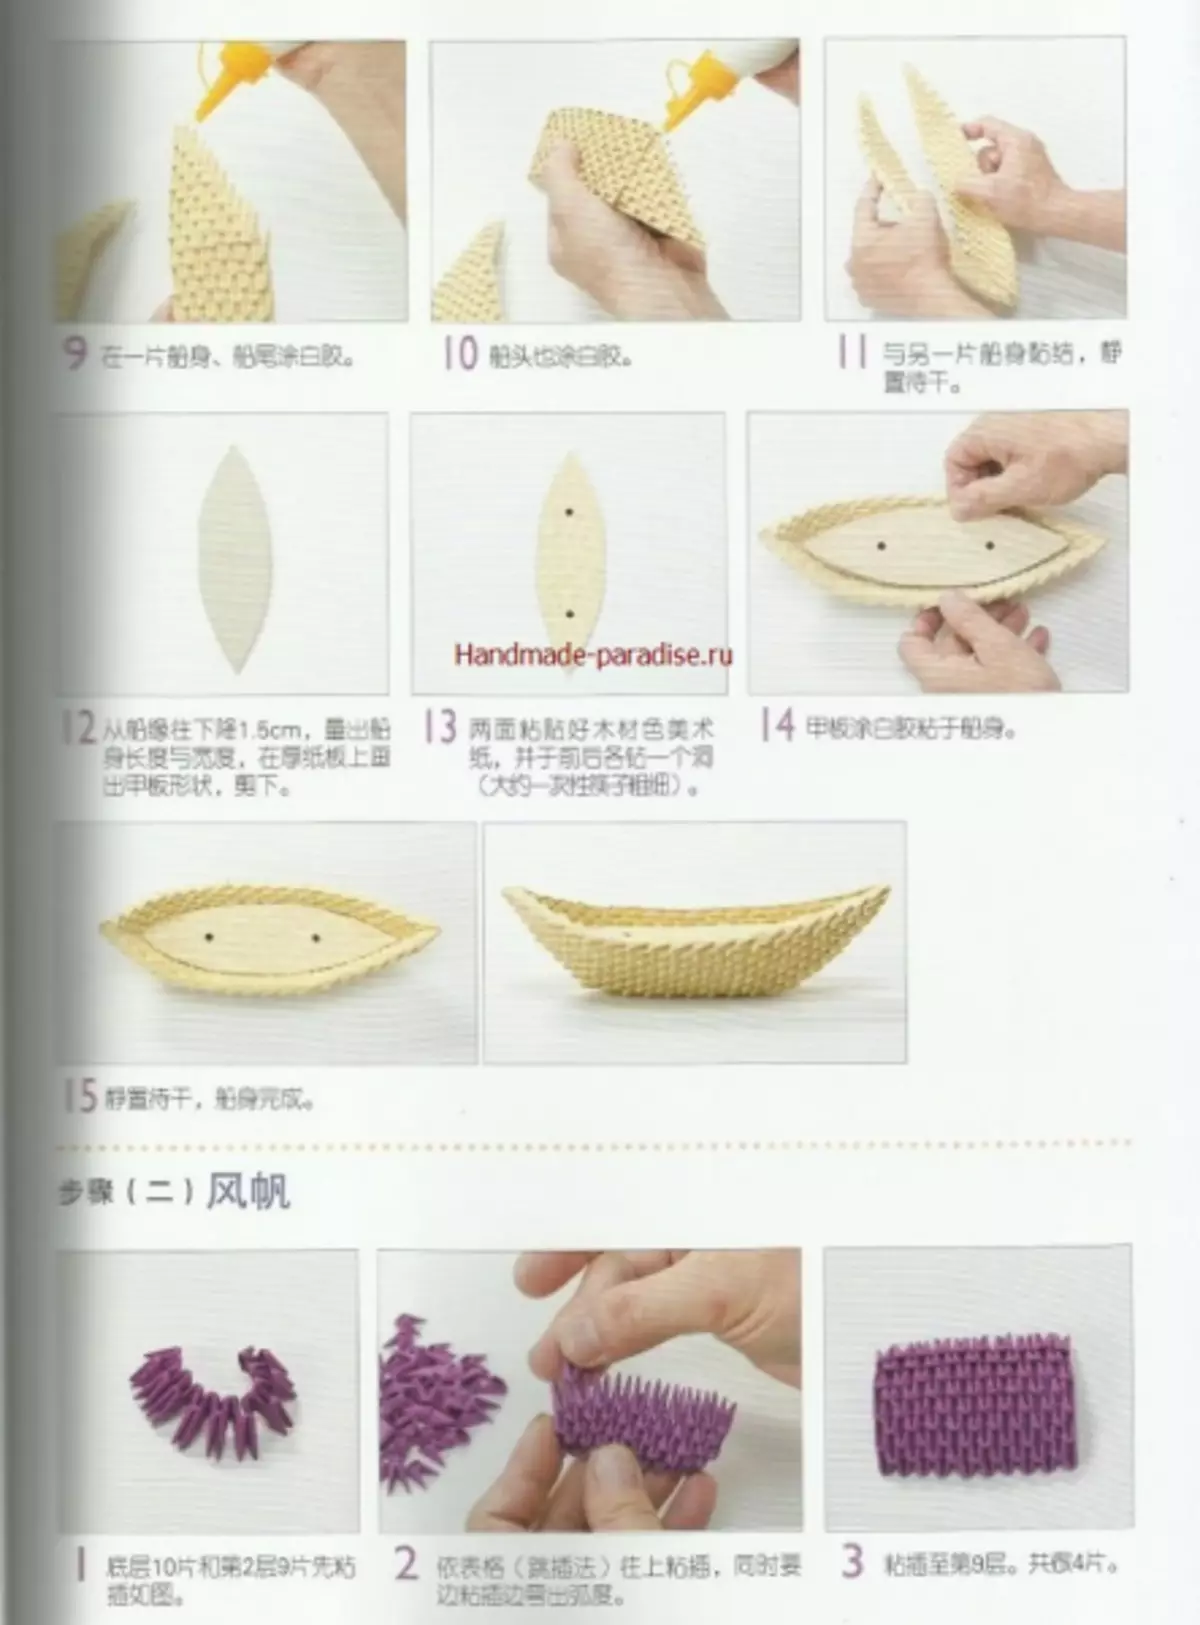 Modular origami. Japanese magazine na may master class